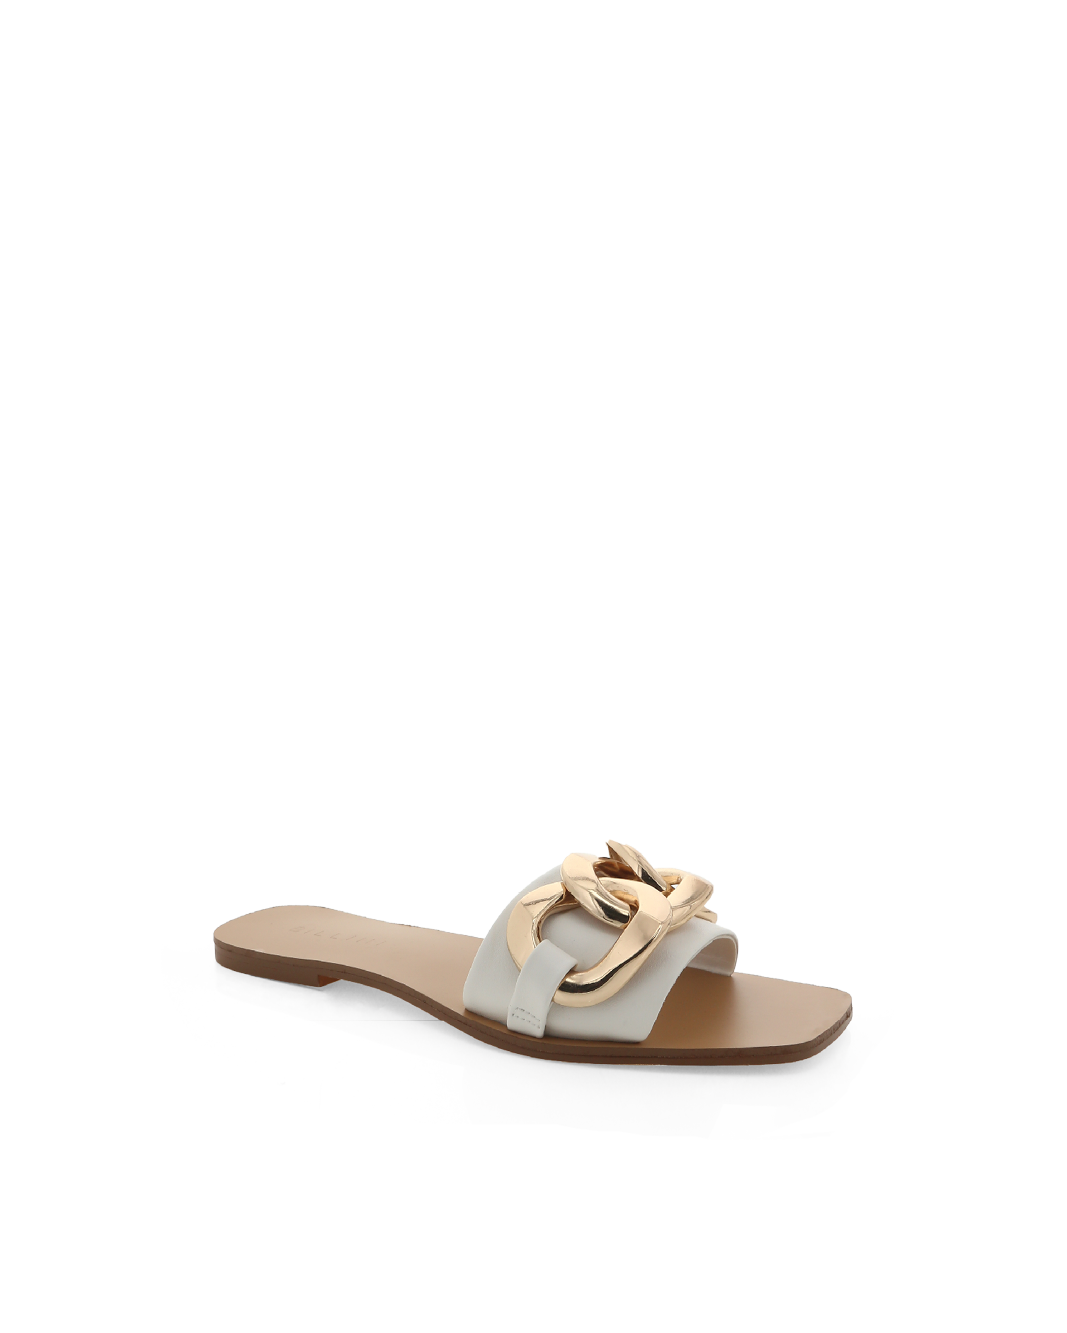 FARRIS - WHITE-Sandals-Billini-Billini